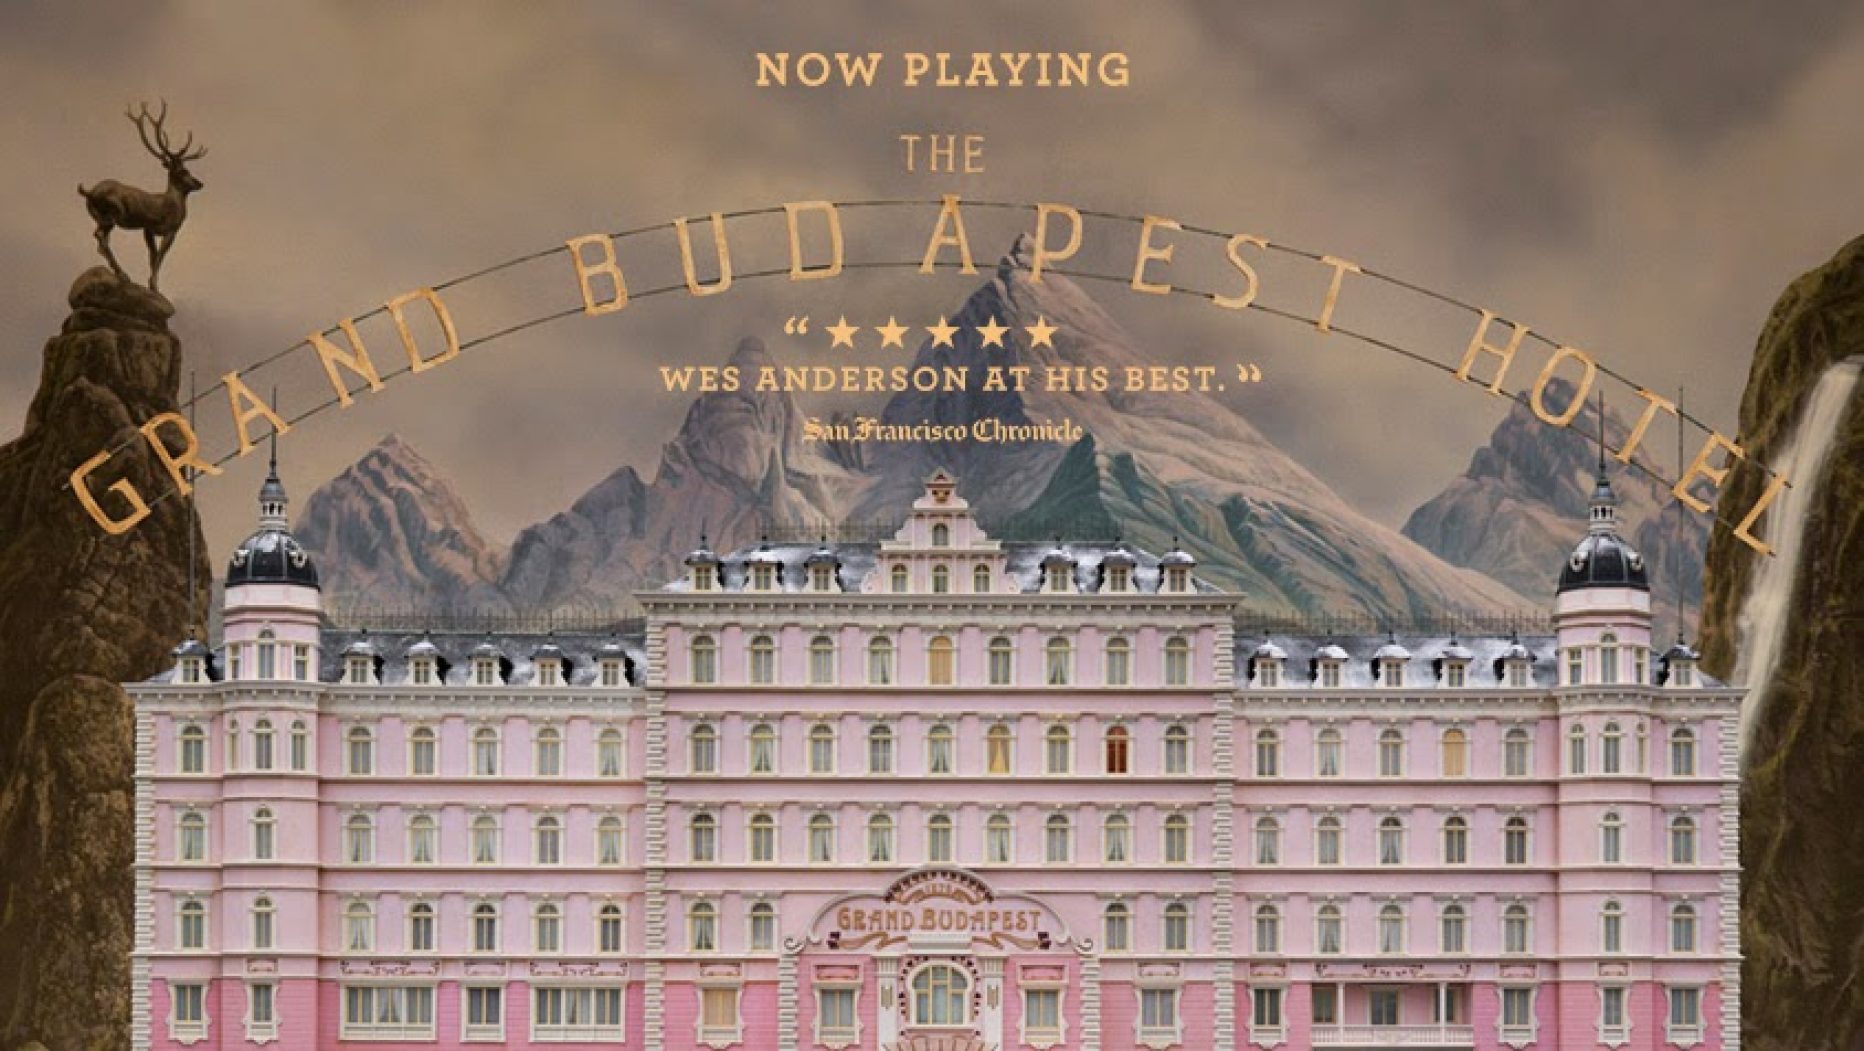 Grand Budapest Hotel